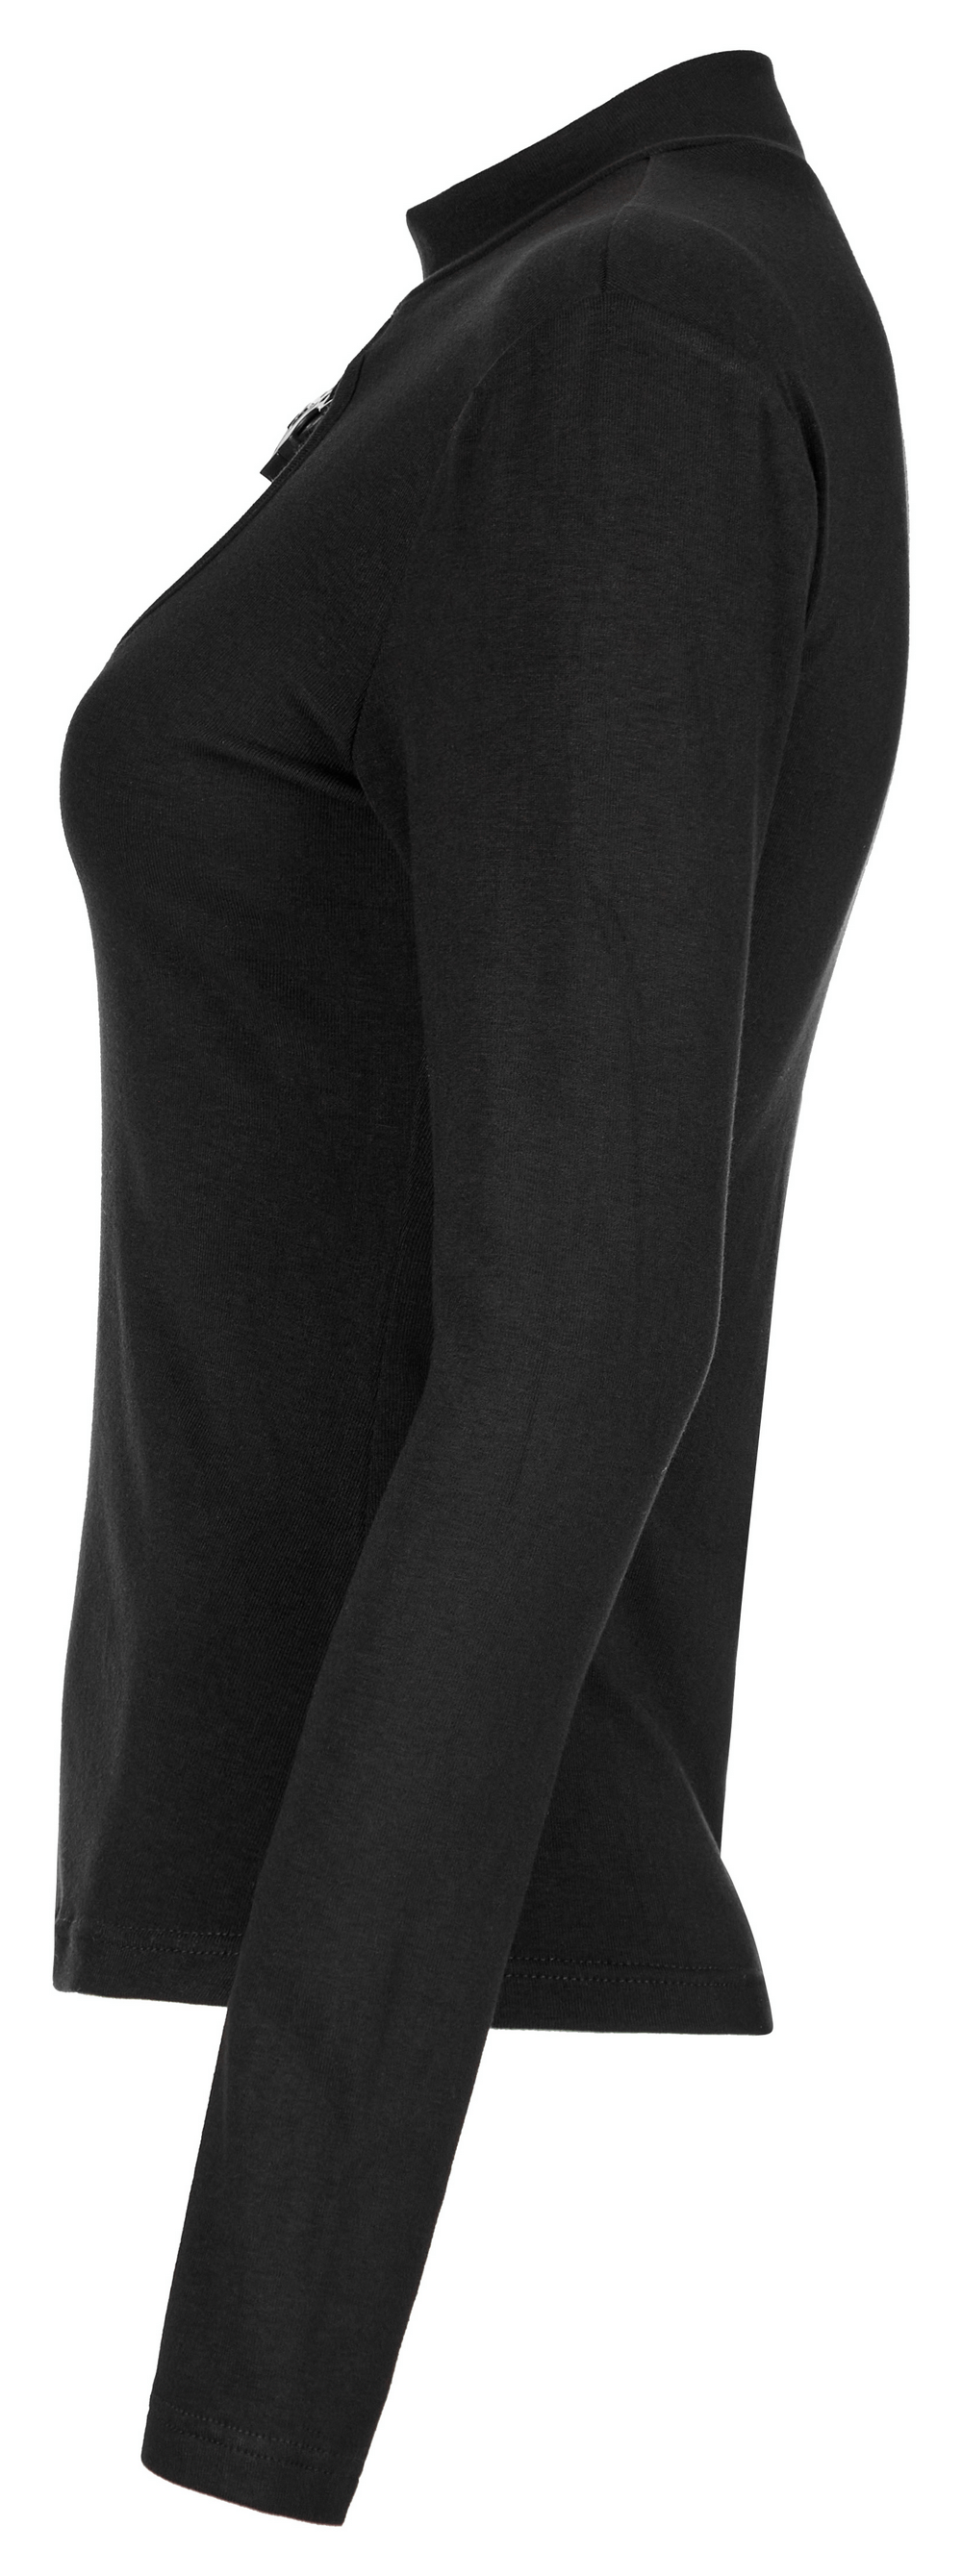 Black Long Sleeves Buckle Turtleneck Top for Women